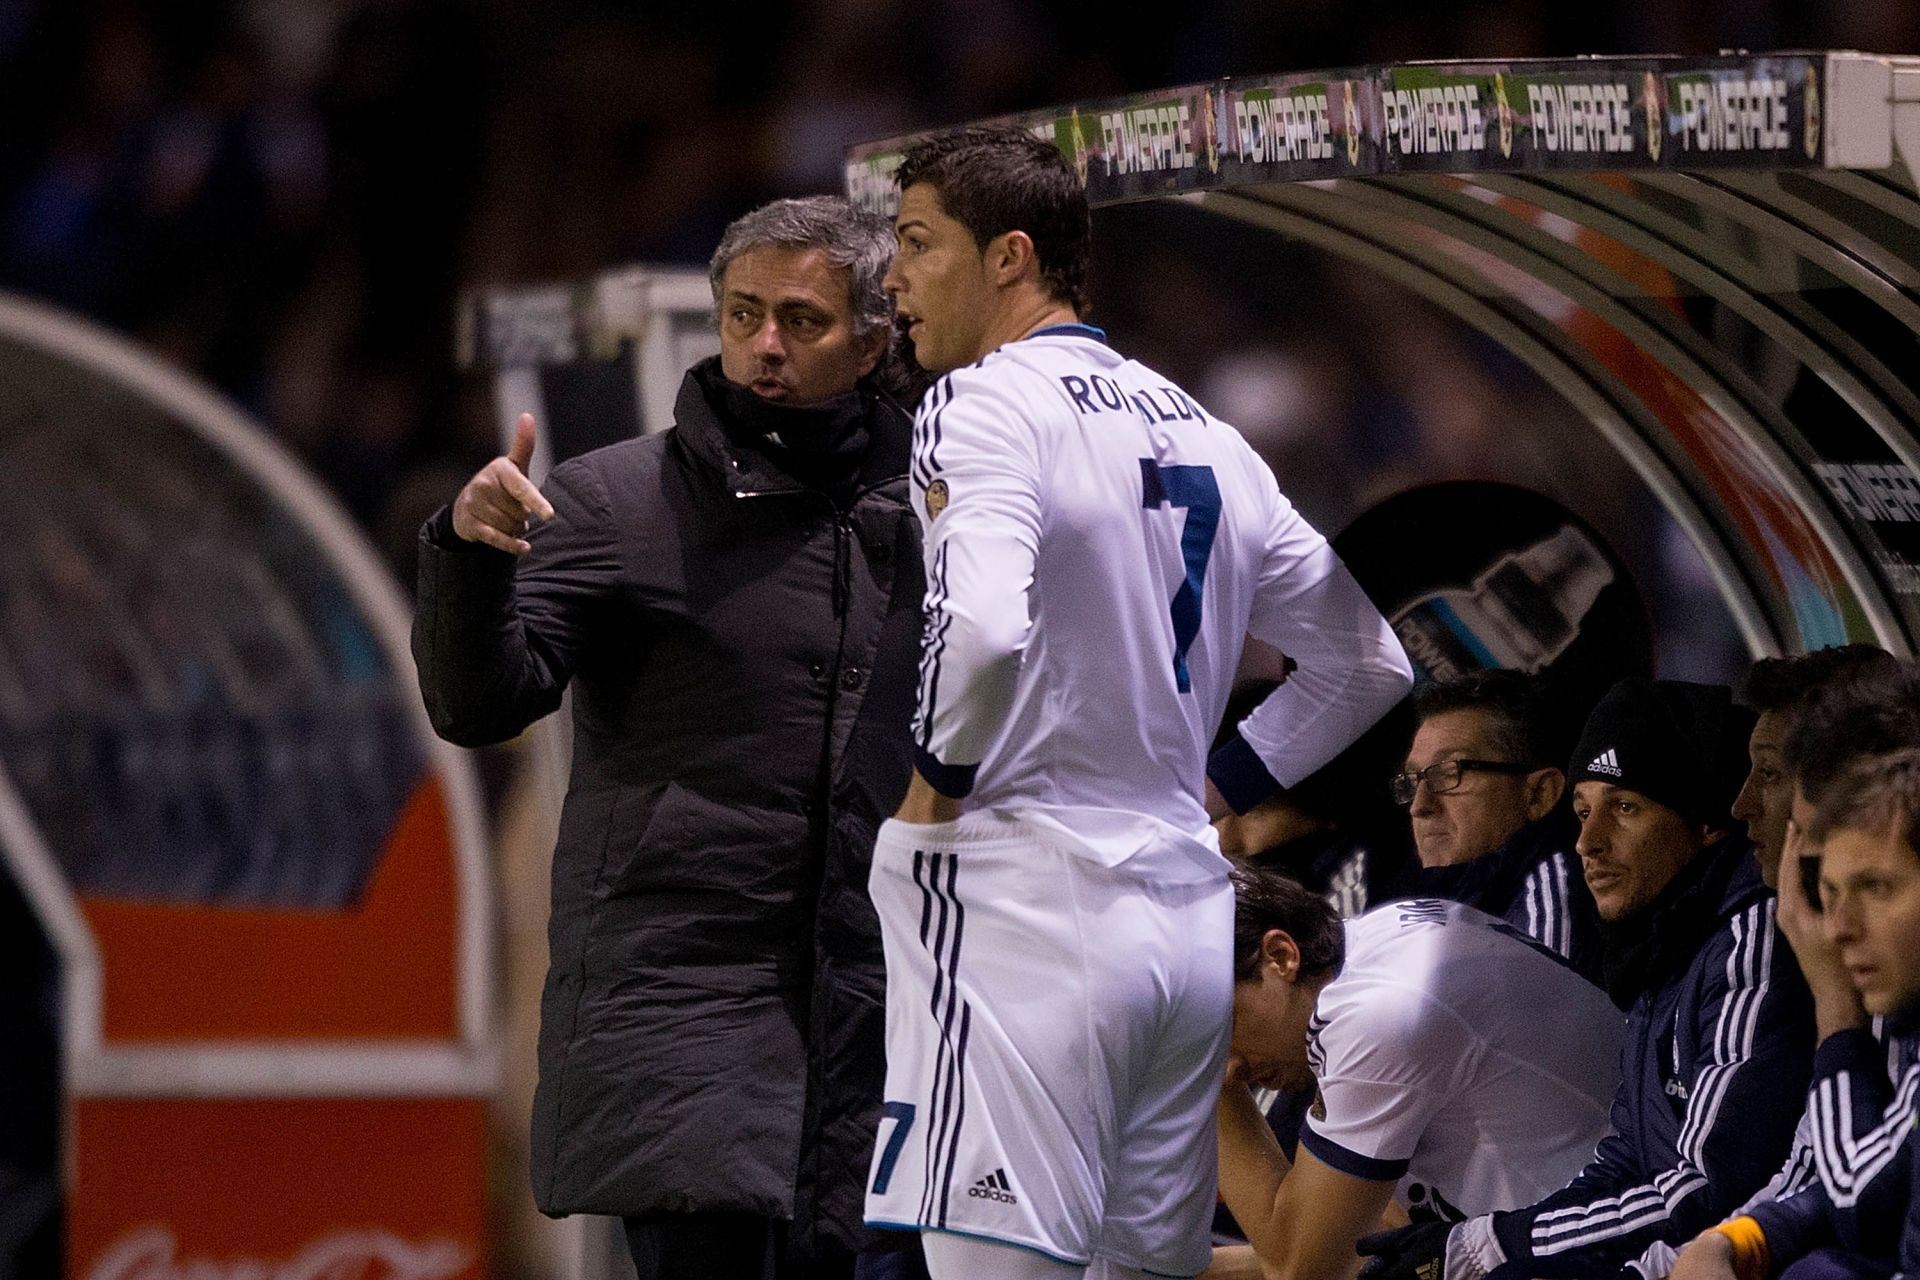 Jose Mourinho (left) managed Ronaldo (#7) in many games at Real Madrid.